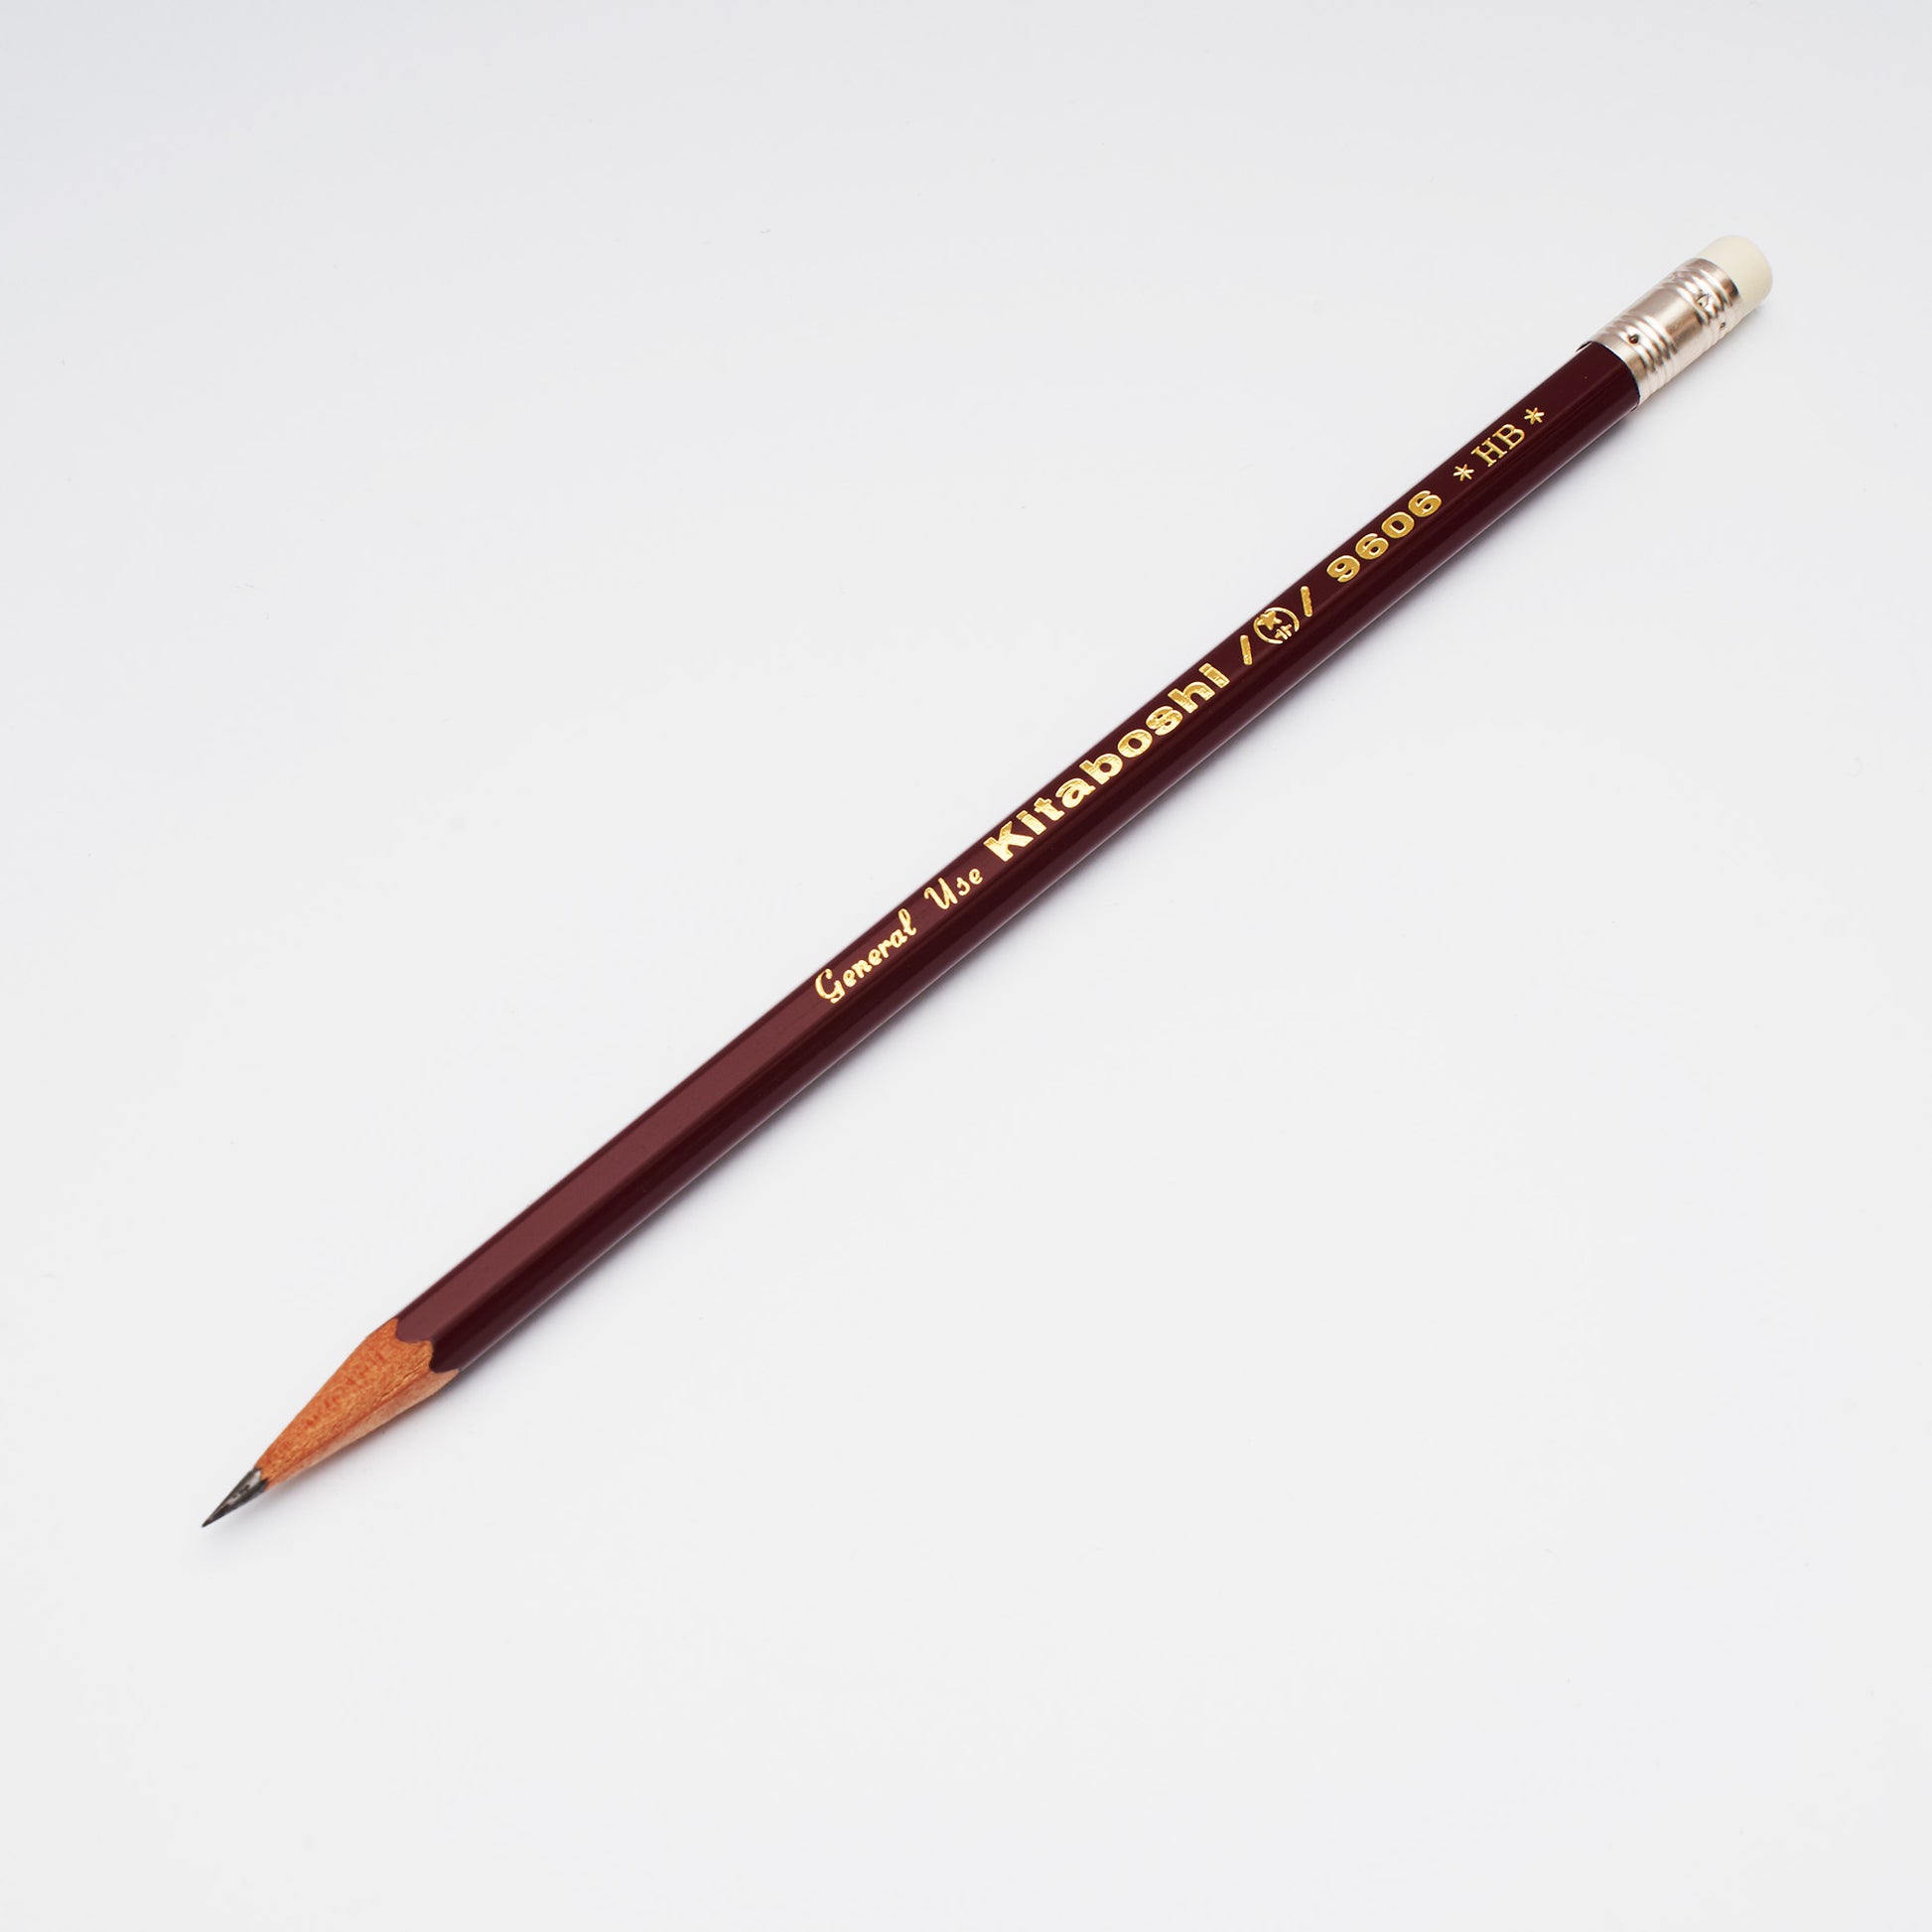 Kitaboshi 9606 HB Writing Pencil Made in Japan